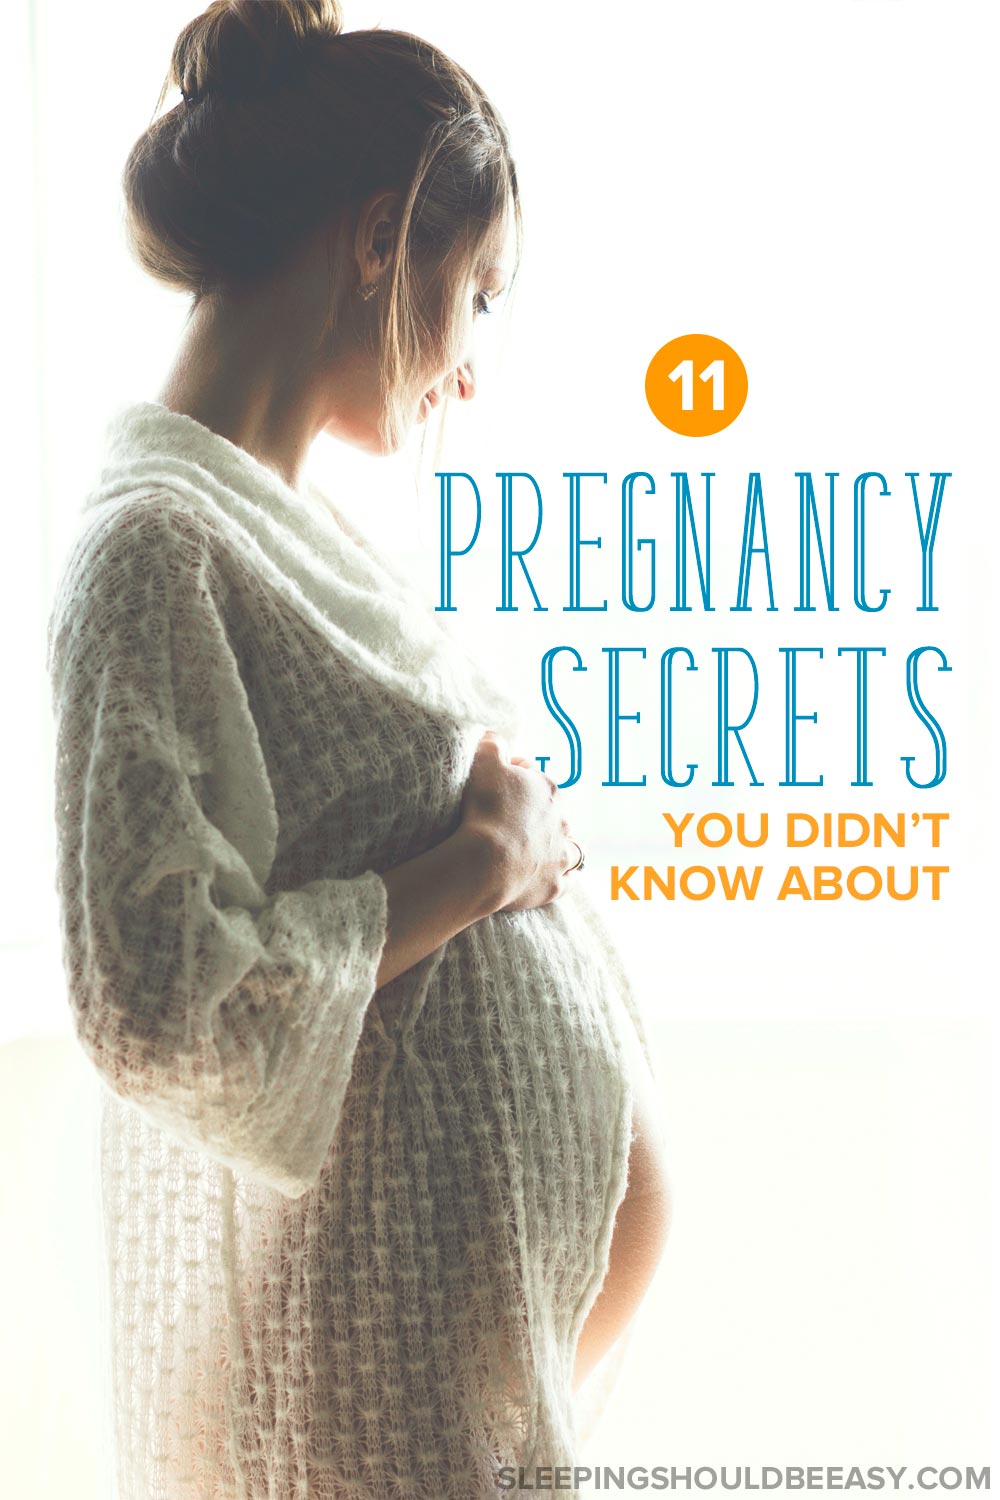 11 Pregnancy Secrets You Didn